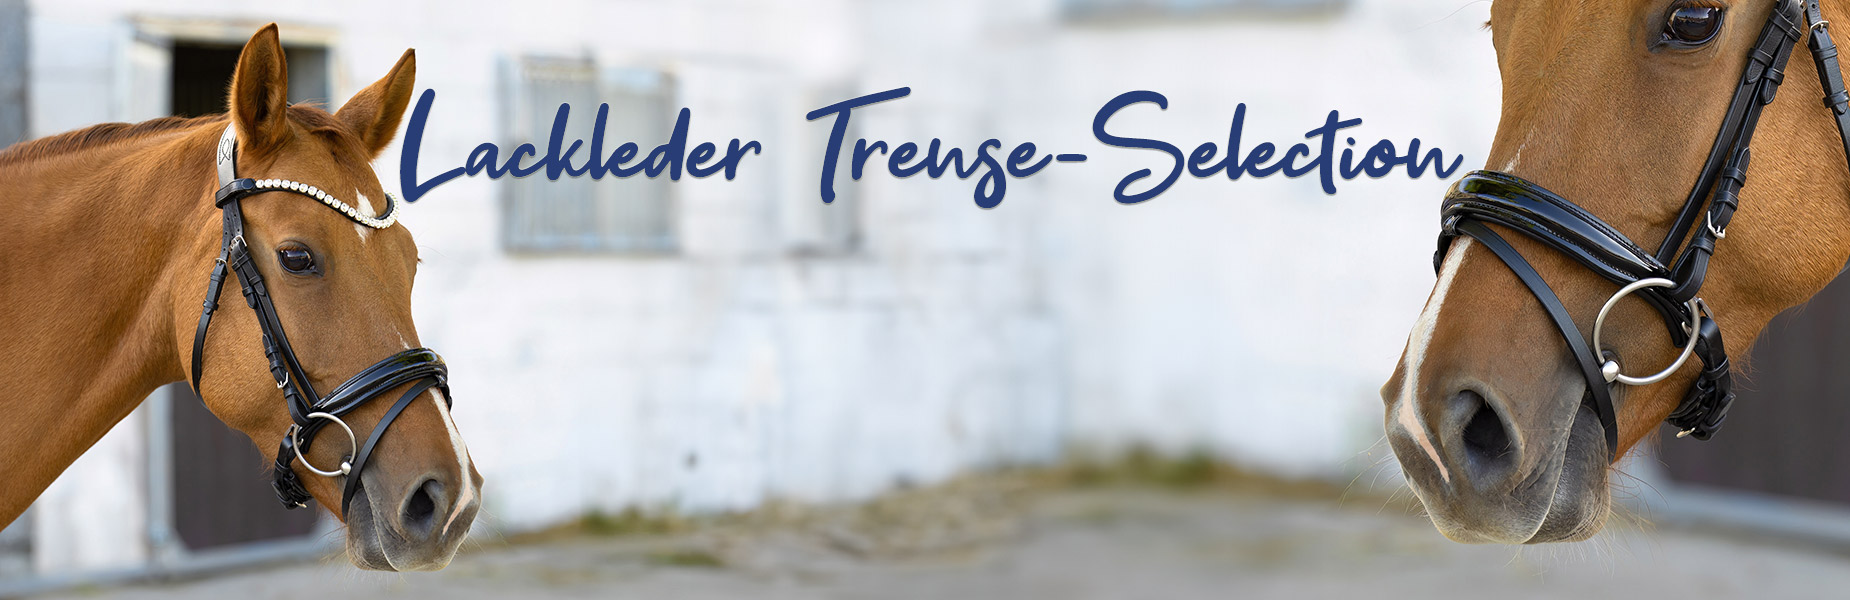 Trense-Selection-Lack-Schwarz-Banner